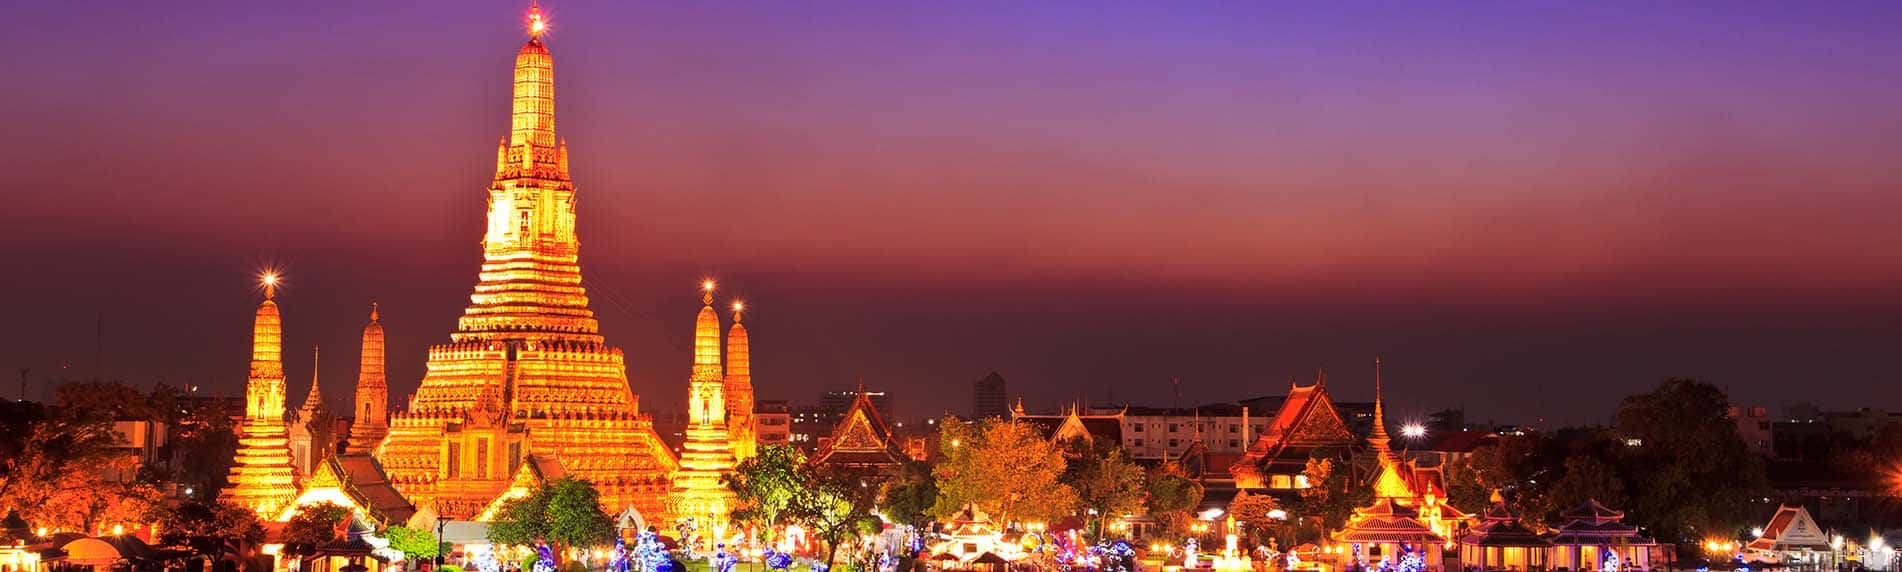 temple tour in bangkok